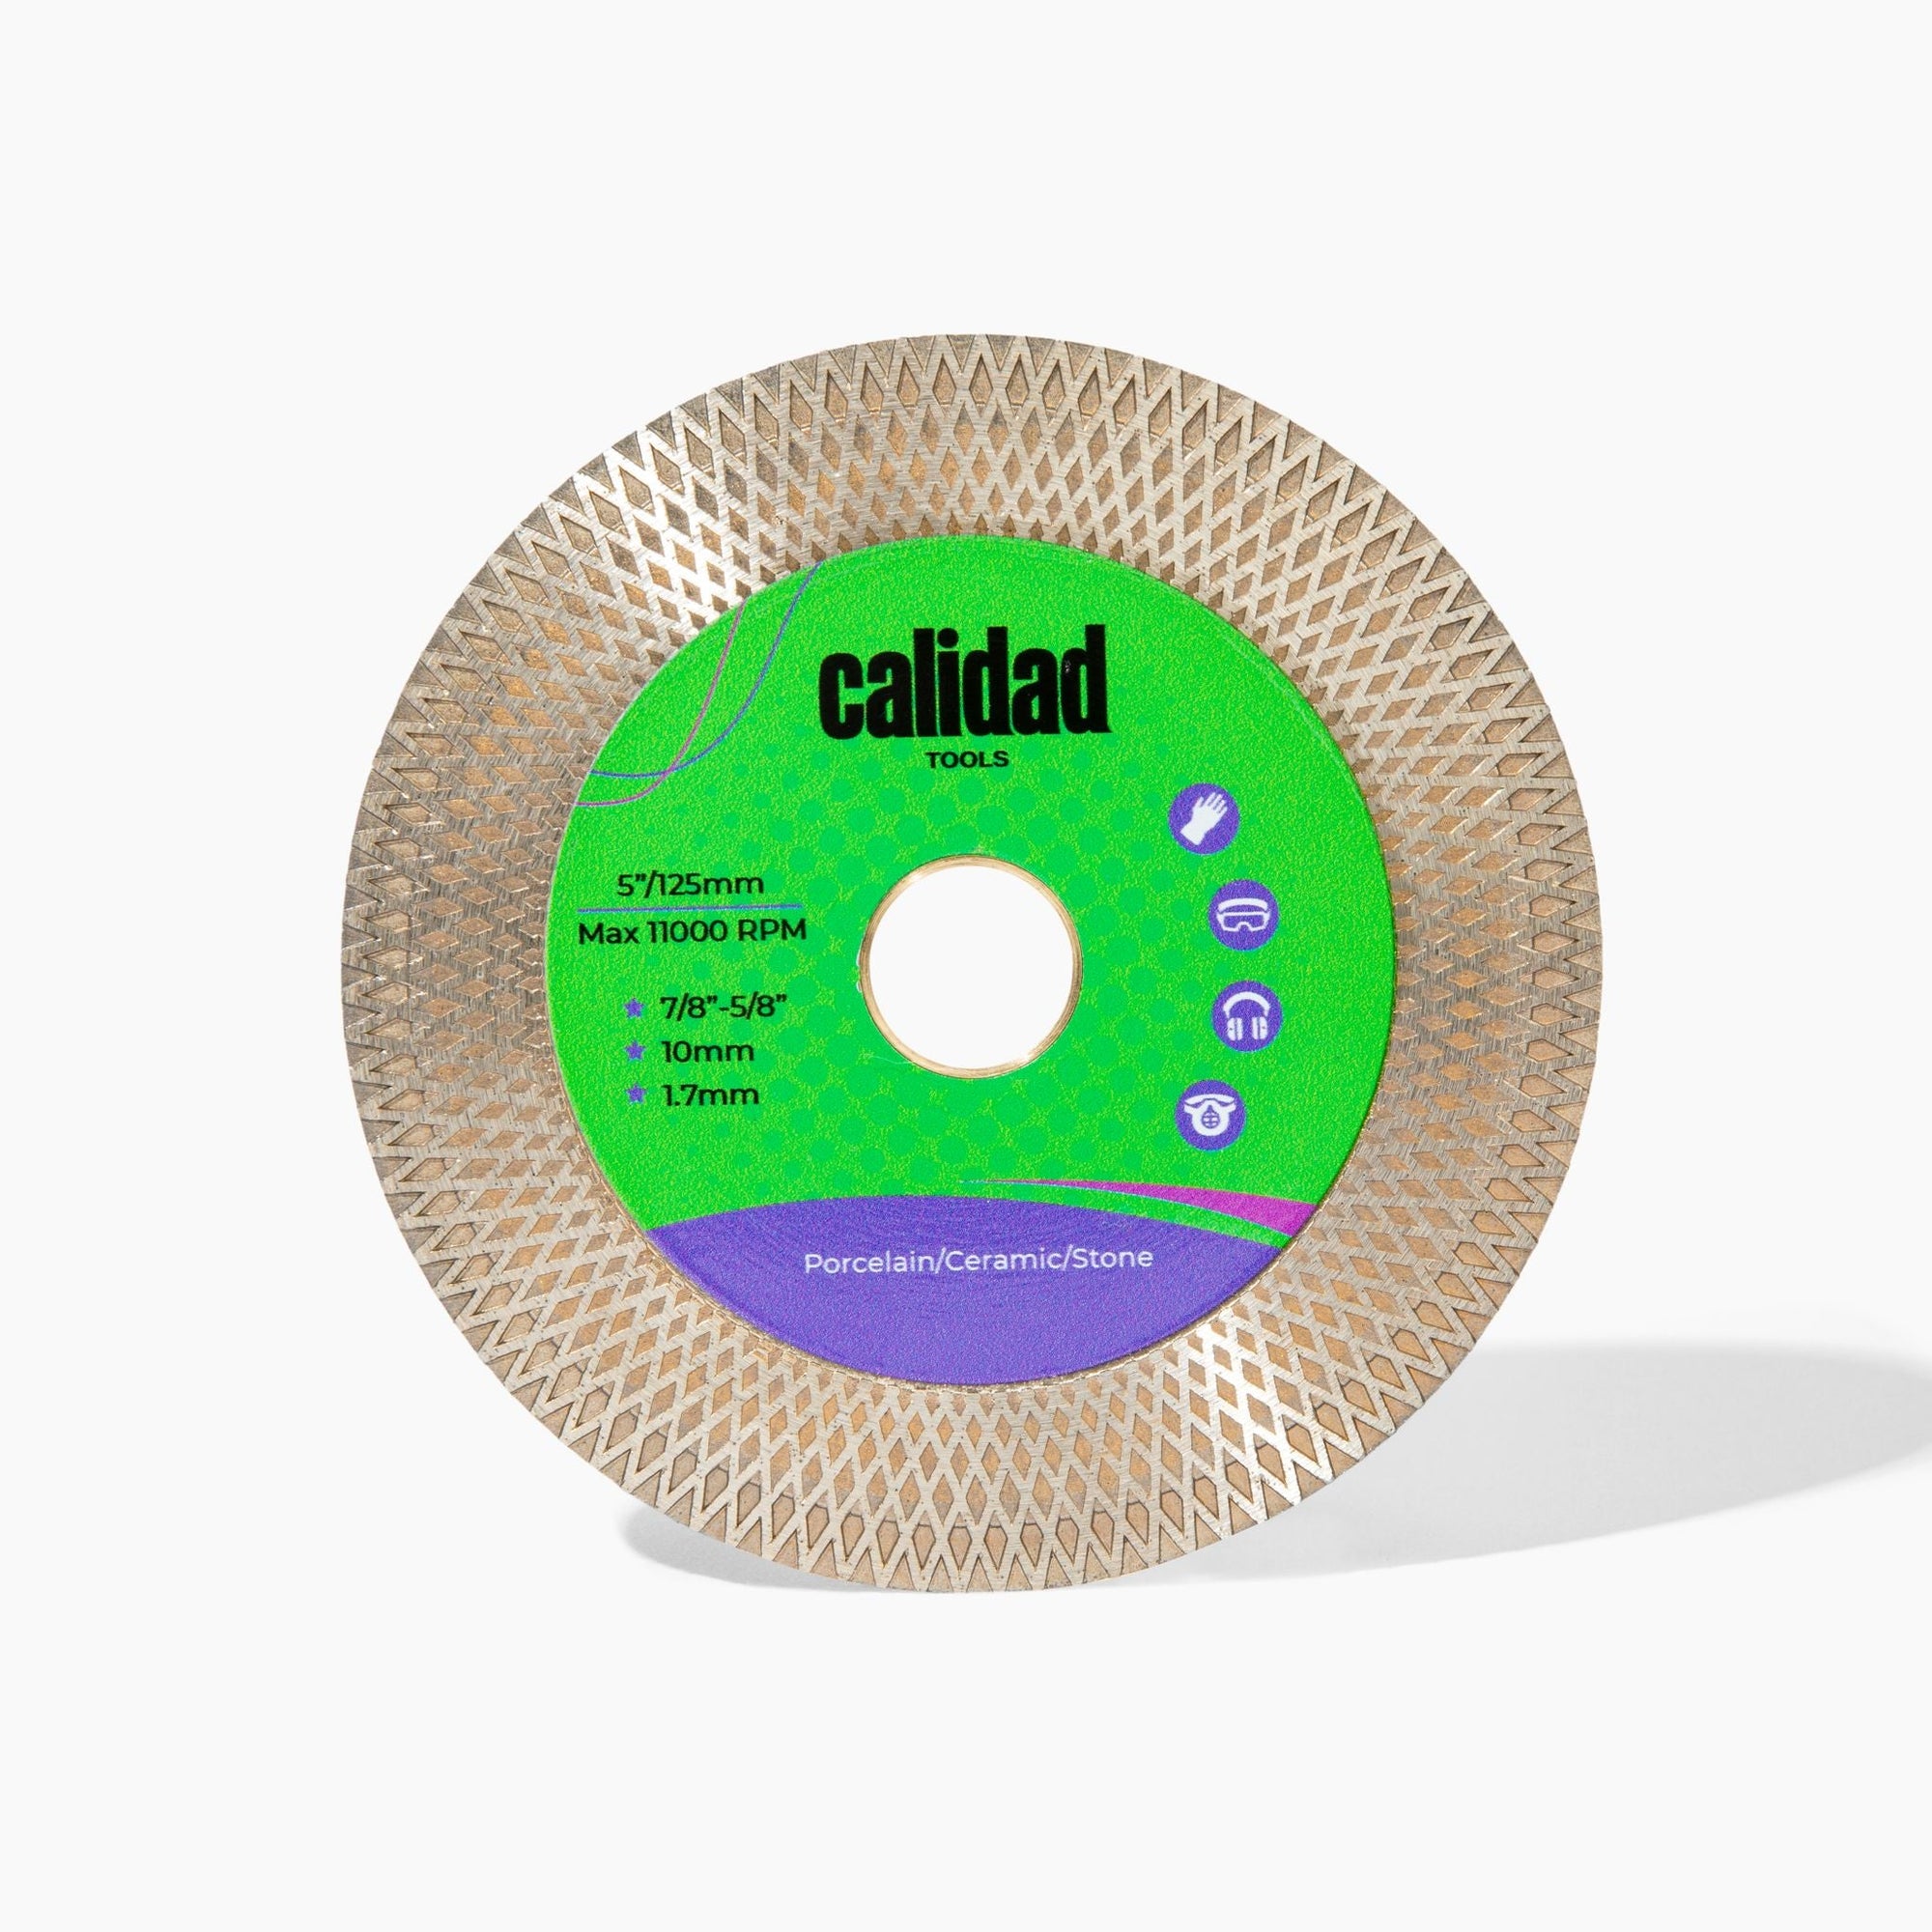 Calidad 5" Turbo Mesh Cutting & Shaping Disc "Durty Kurt" (Flangeless) - Calidad Tools